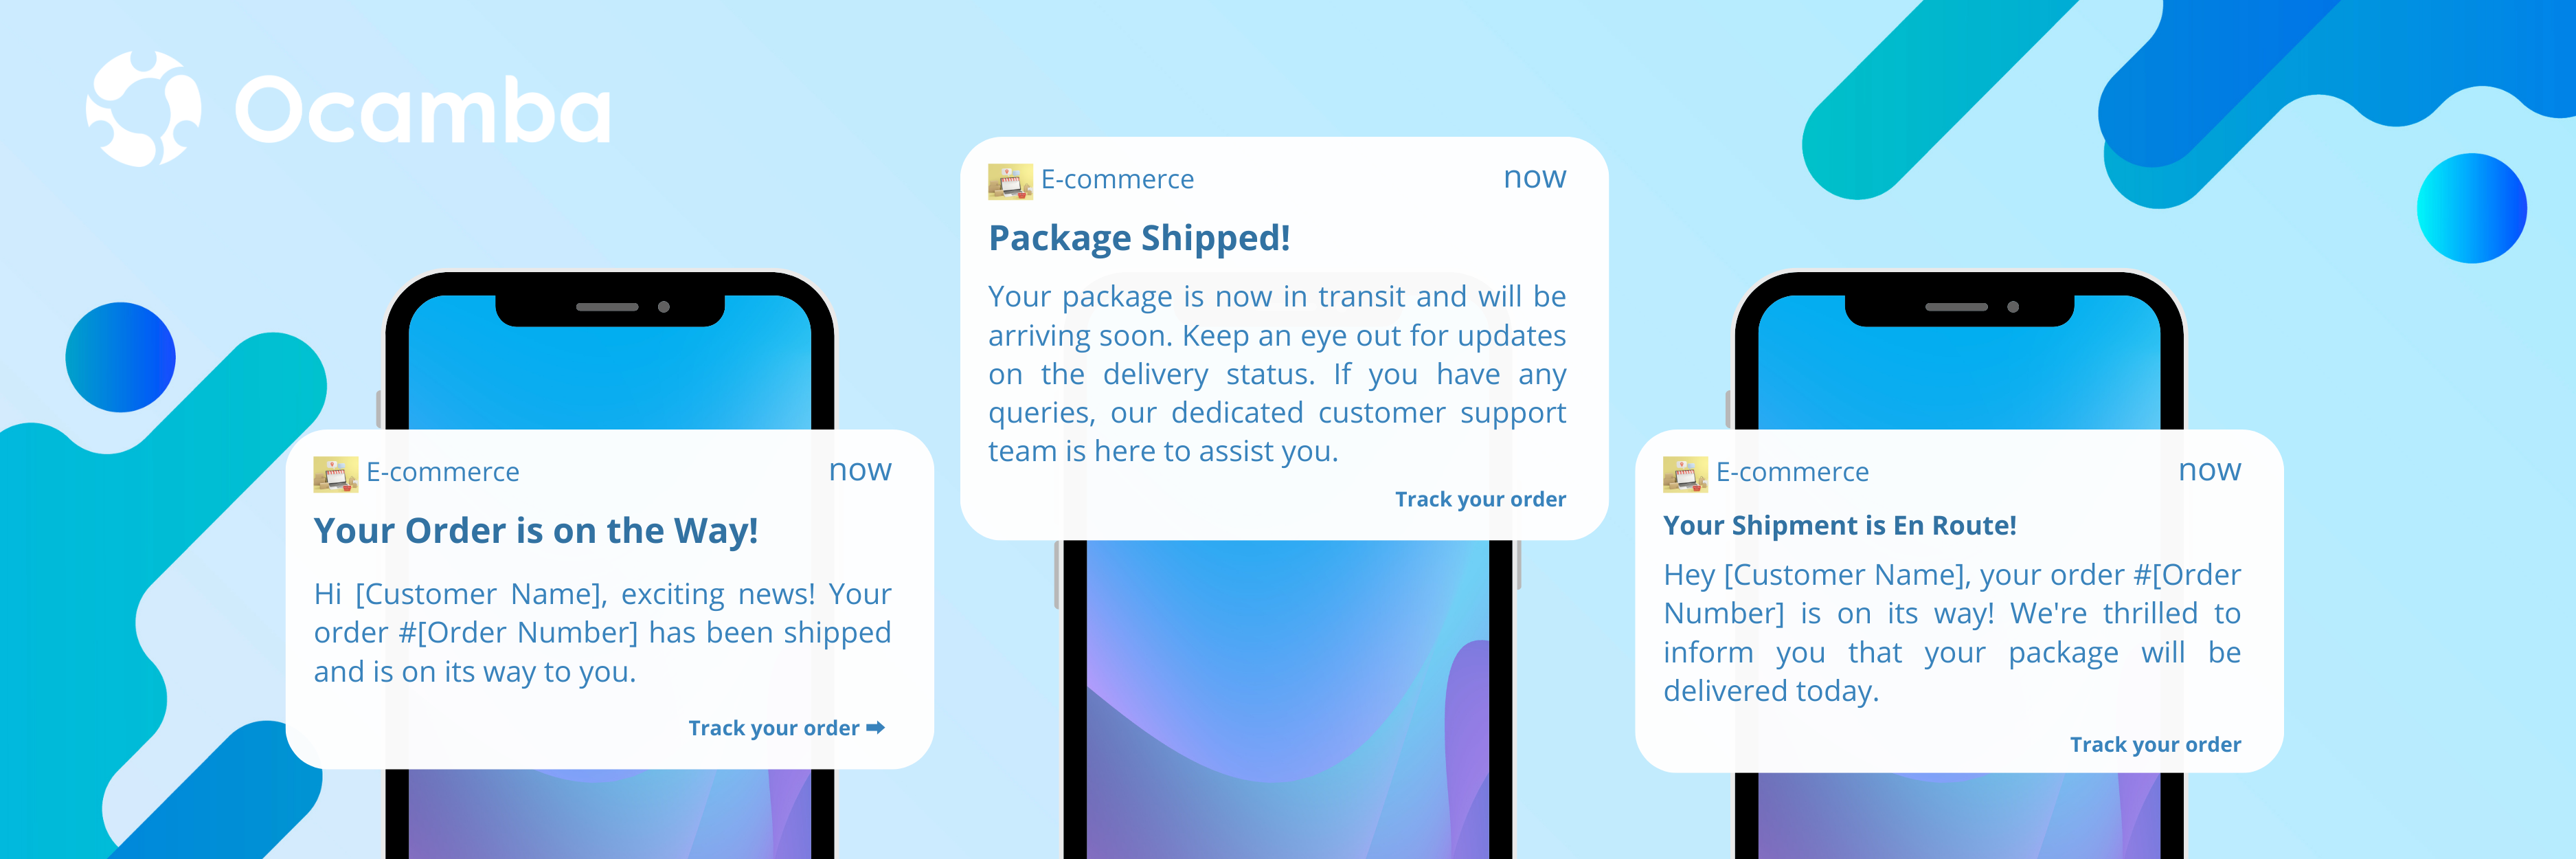 Ecommerce push notifications templates for shipment status